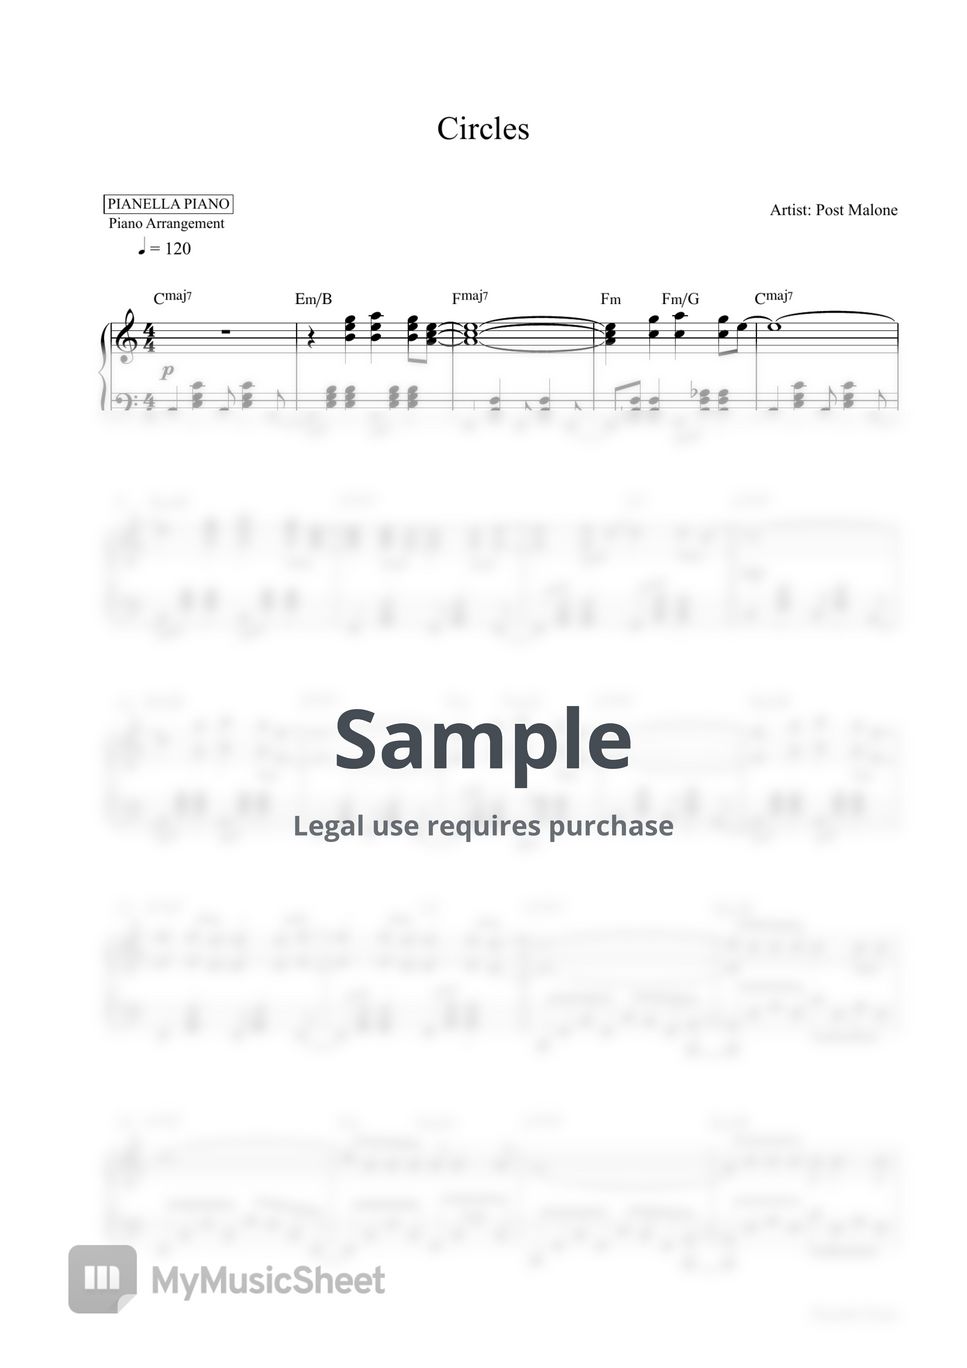 Post Malone - Circles (Piano Sheet) by Pianella Piano